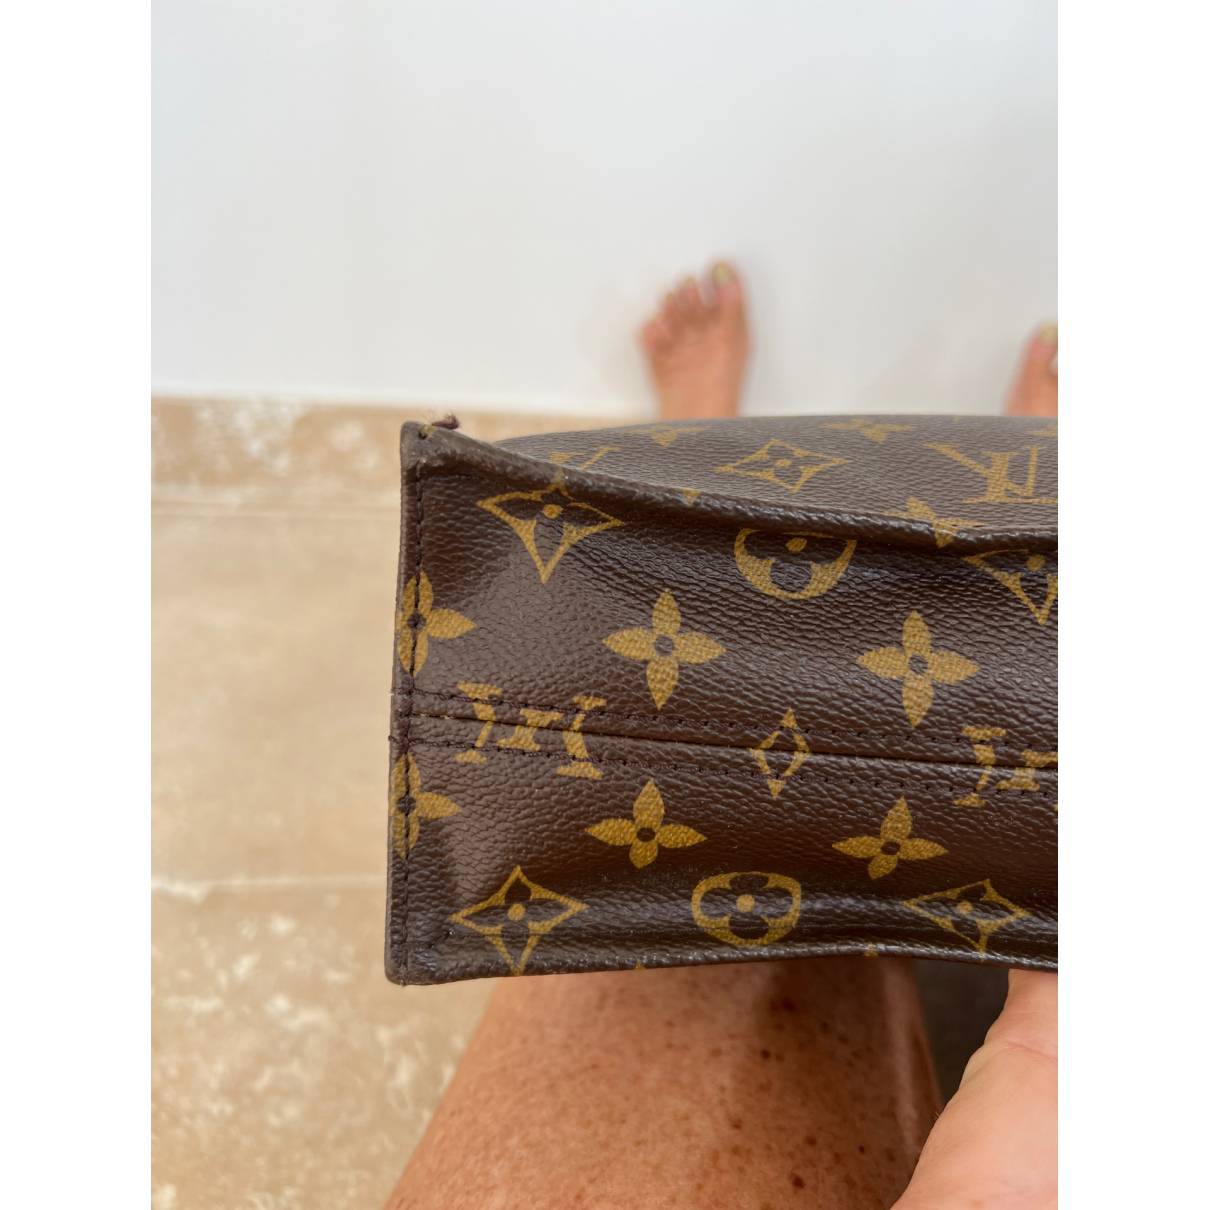 Plat cloth handbag Louis Vuitton